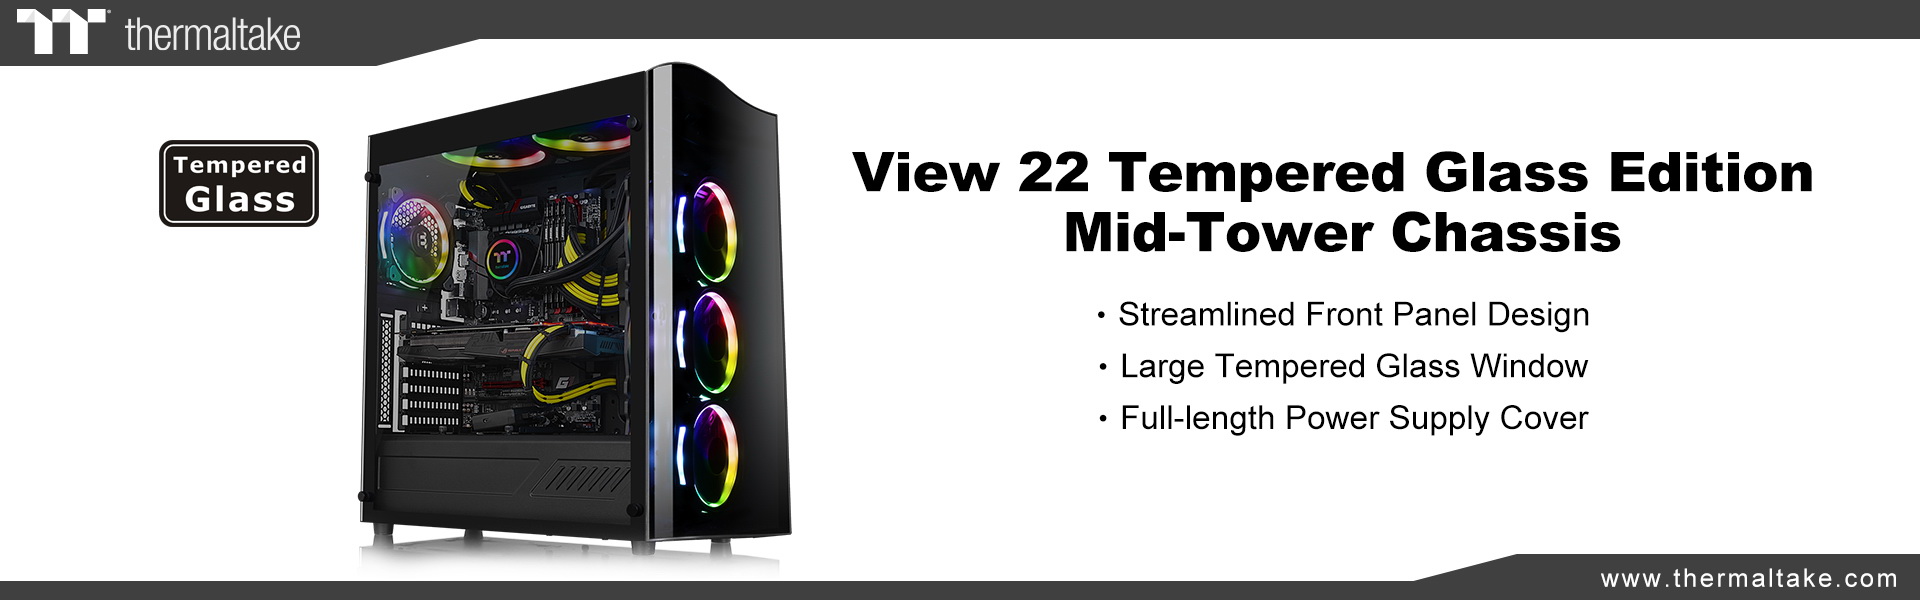 Thermaltake เปิดตัวเคสรุ่นใหม่ล่าสุด Thermaltake New View 22 Tempered Glass Edition Mid-Tower Chassis กับดีไซน์ที่โค้งมนอันทรงประสิทธิภาพ